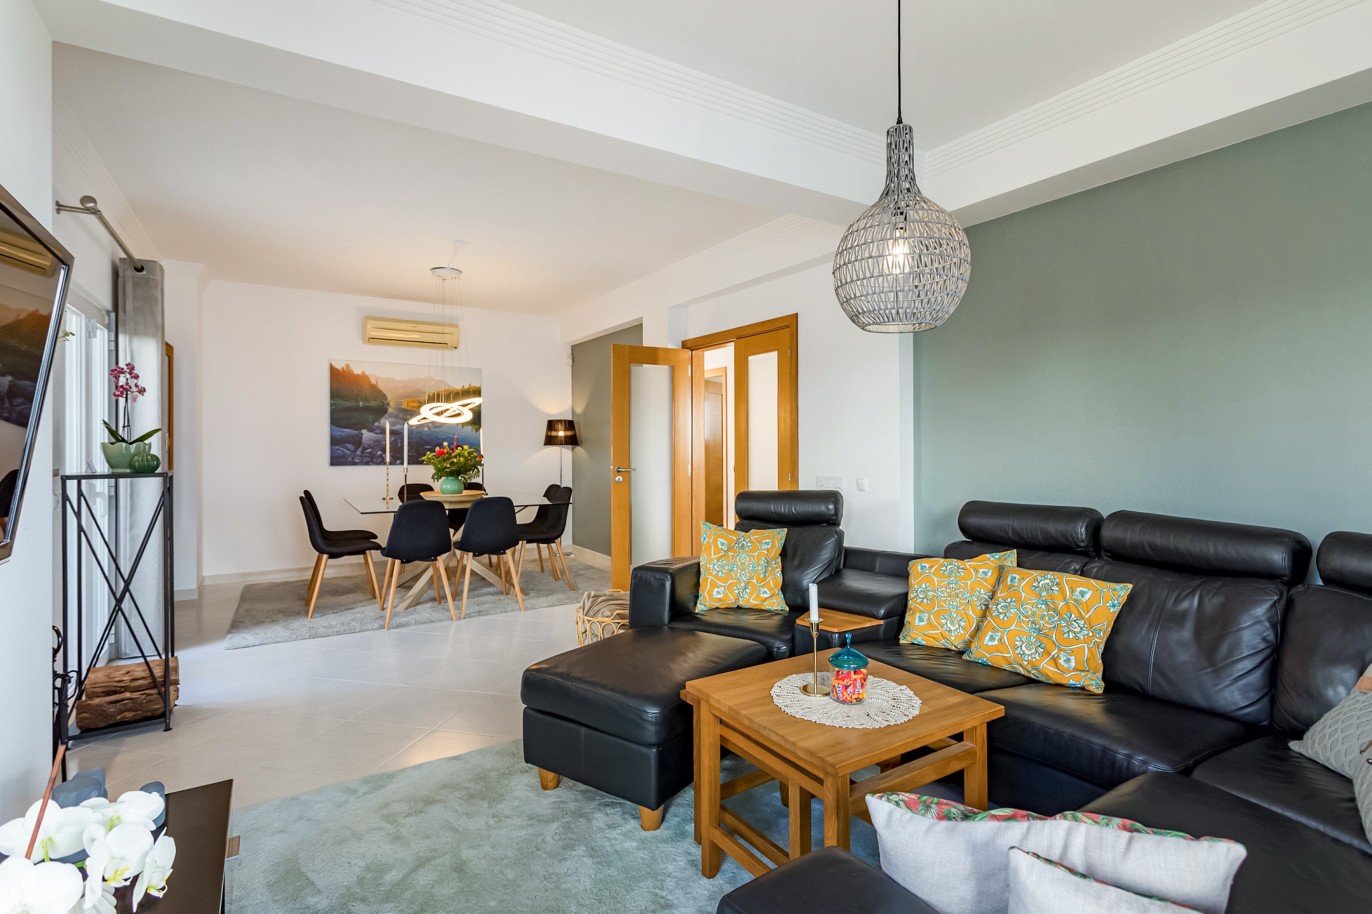 4 bedroom detached villa with pool for sale in Albufeira, Algarve_214349